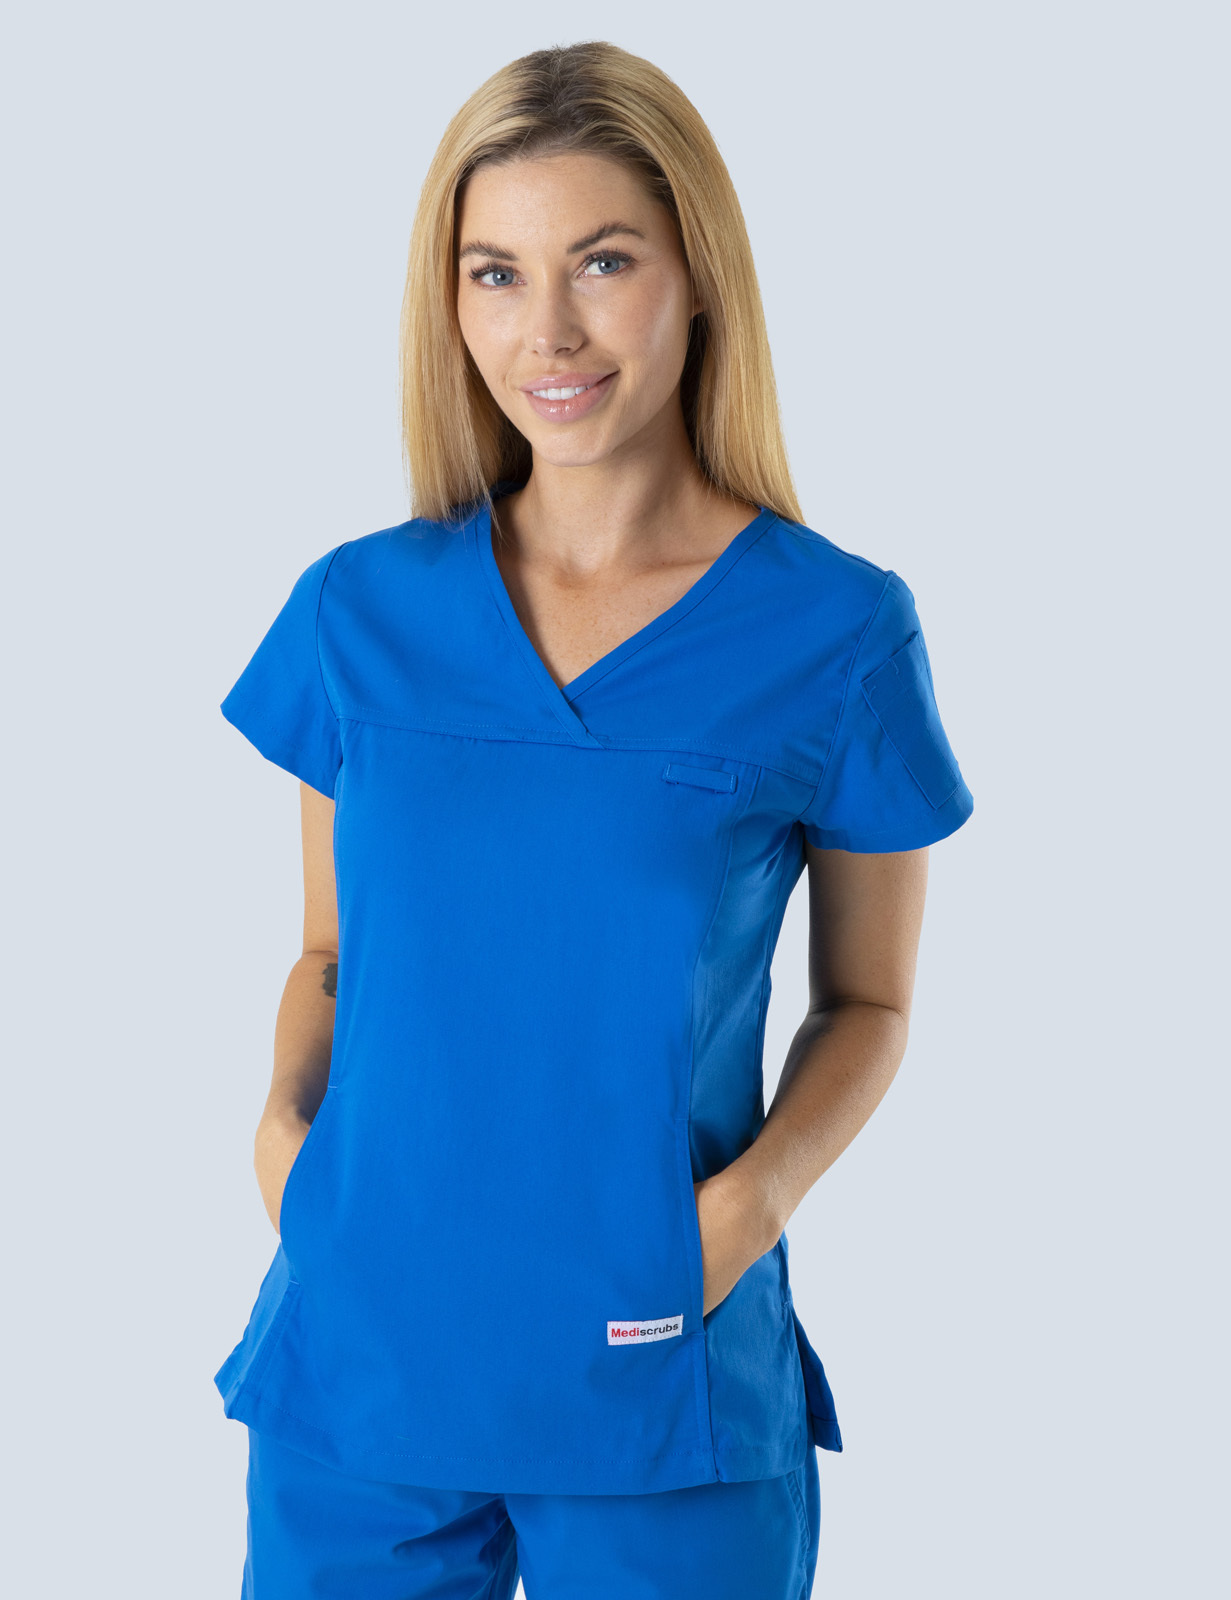 Queensland Children's Hospital Emergency Department Clinical Facilitator Uniform Top Bundle  (Women's Fit Top in Royal incl Logos)